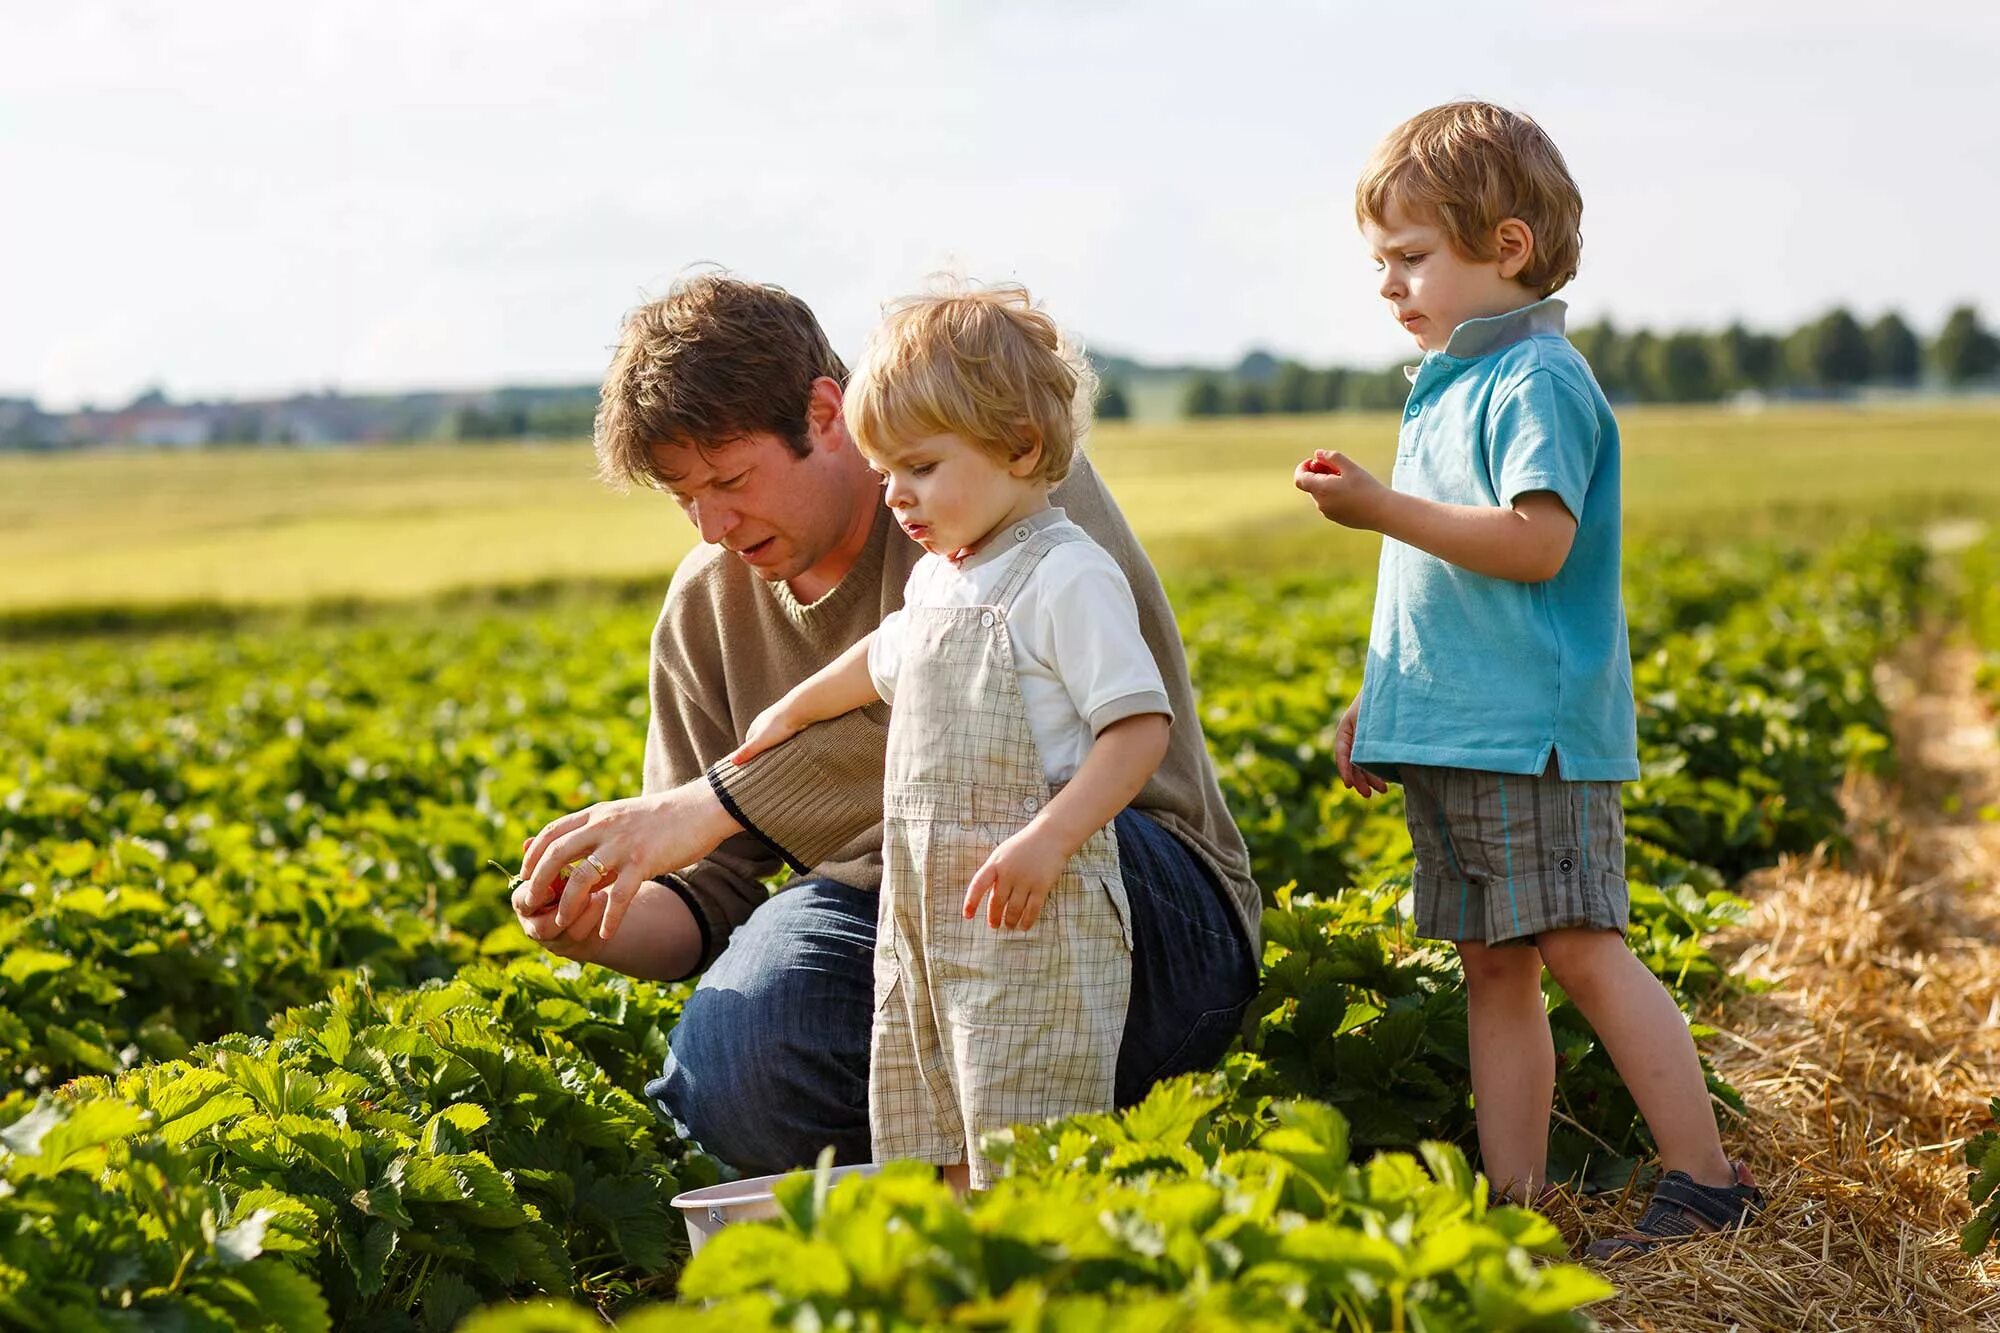 Farmer для детей. Children and Agriculture. Ферма для детей. Европейские фермеры. Farmers father save the innocence